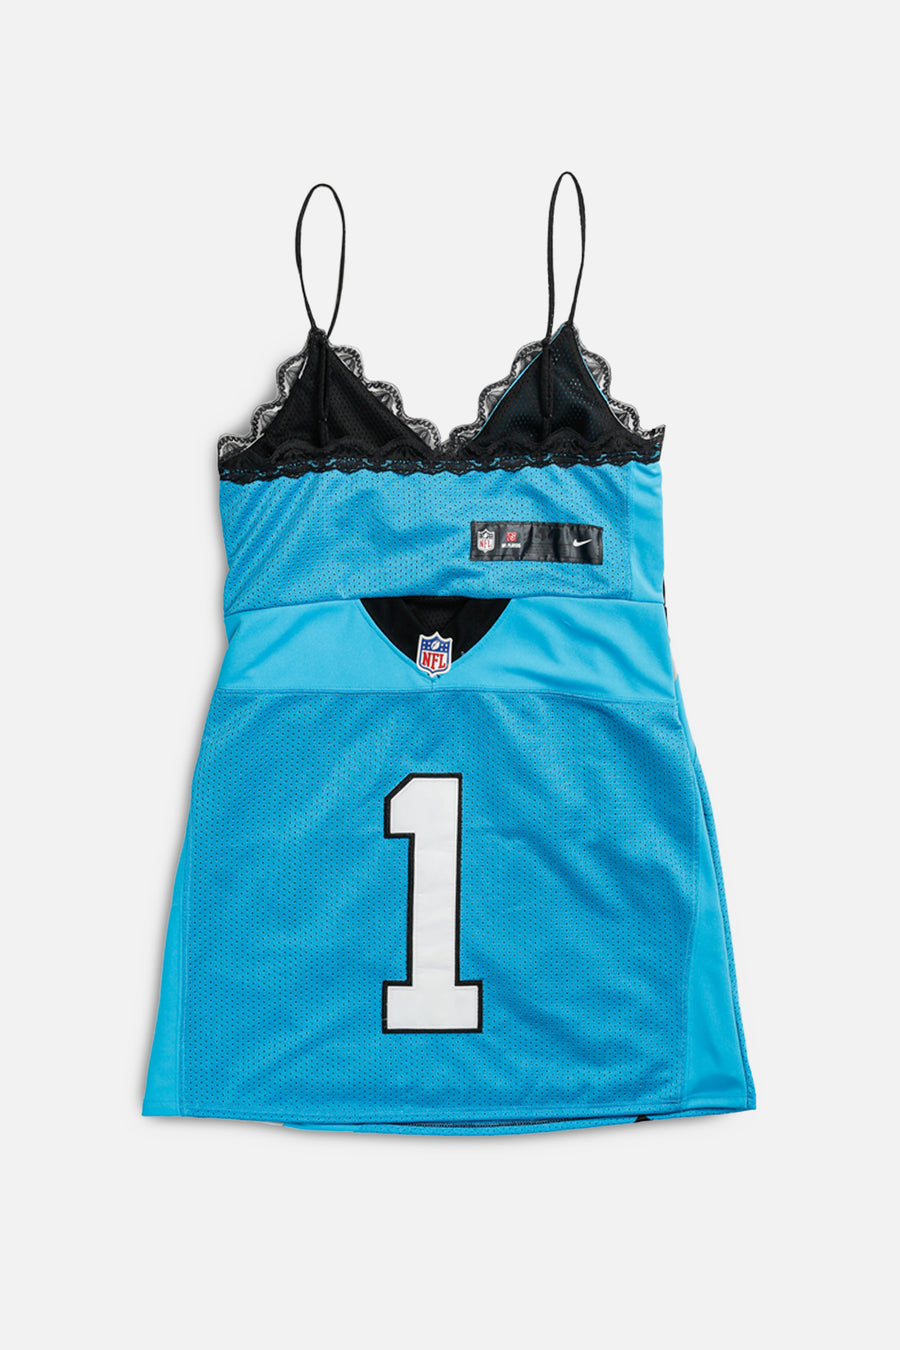 Rework NFL Lace Dress - M